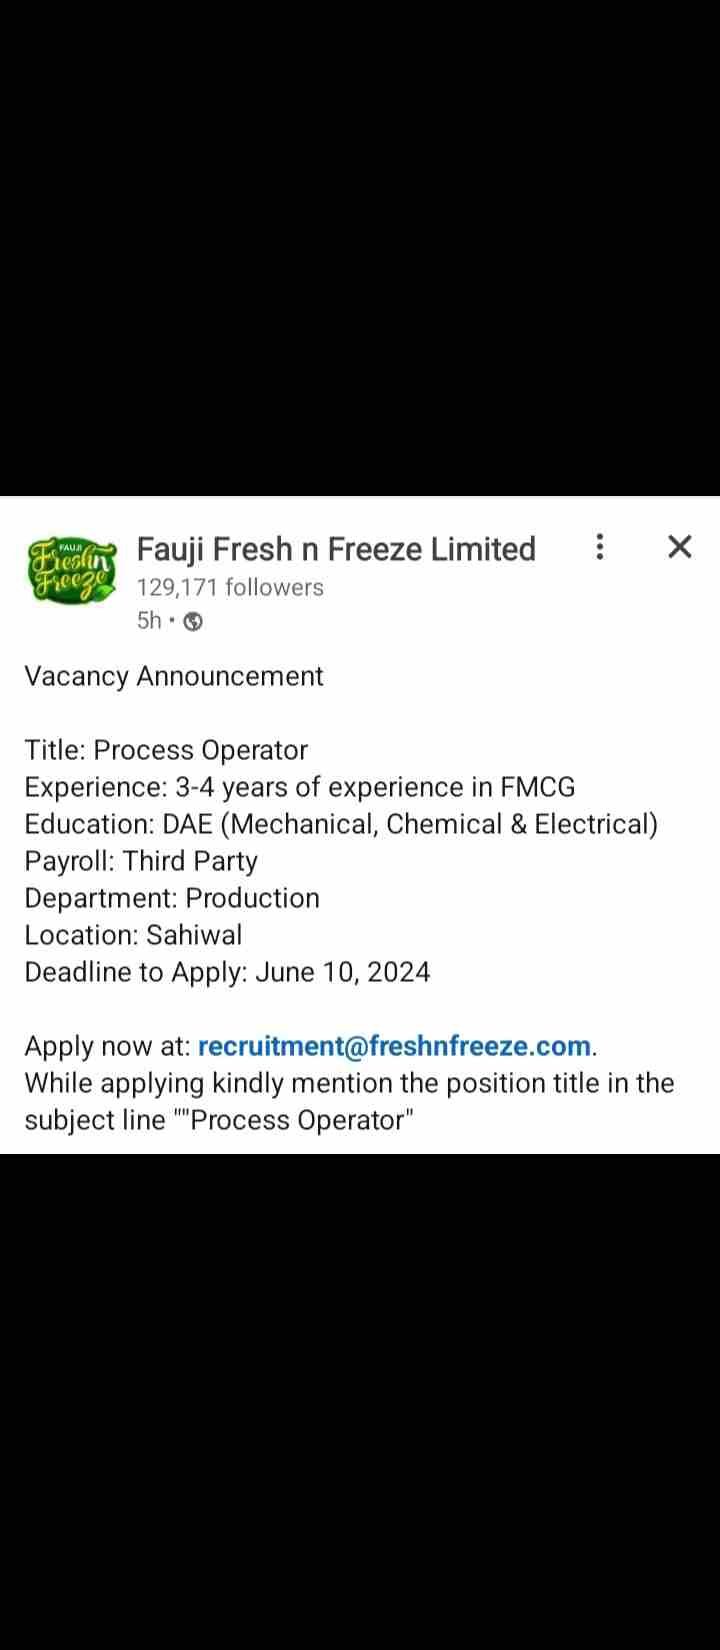 Join Our Team as a Process Operator - Fauji Fresh n Freeze Hiring